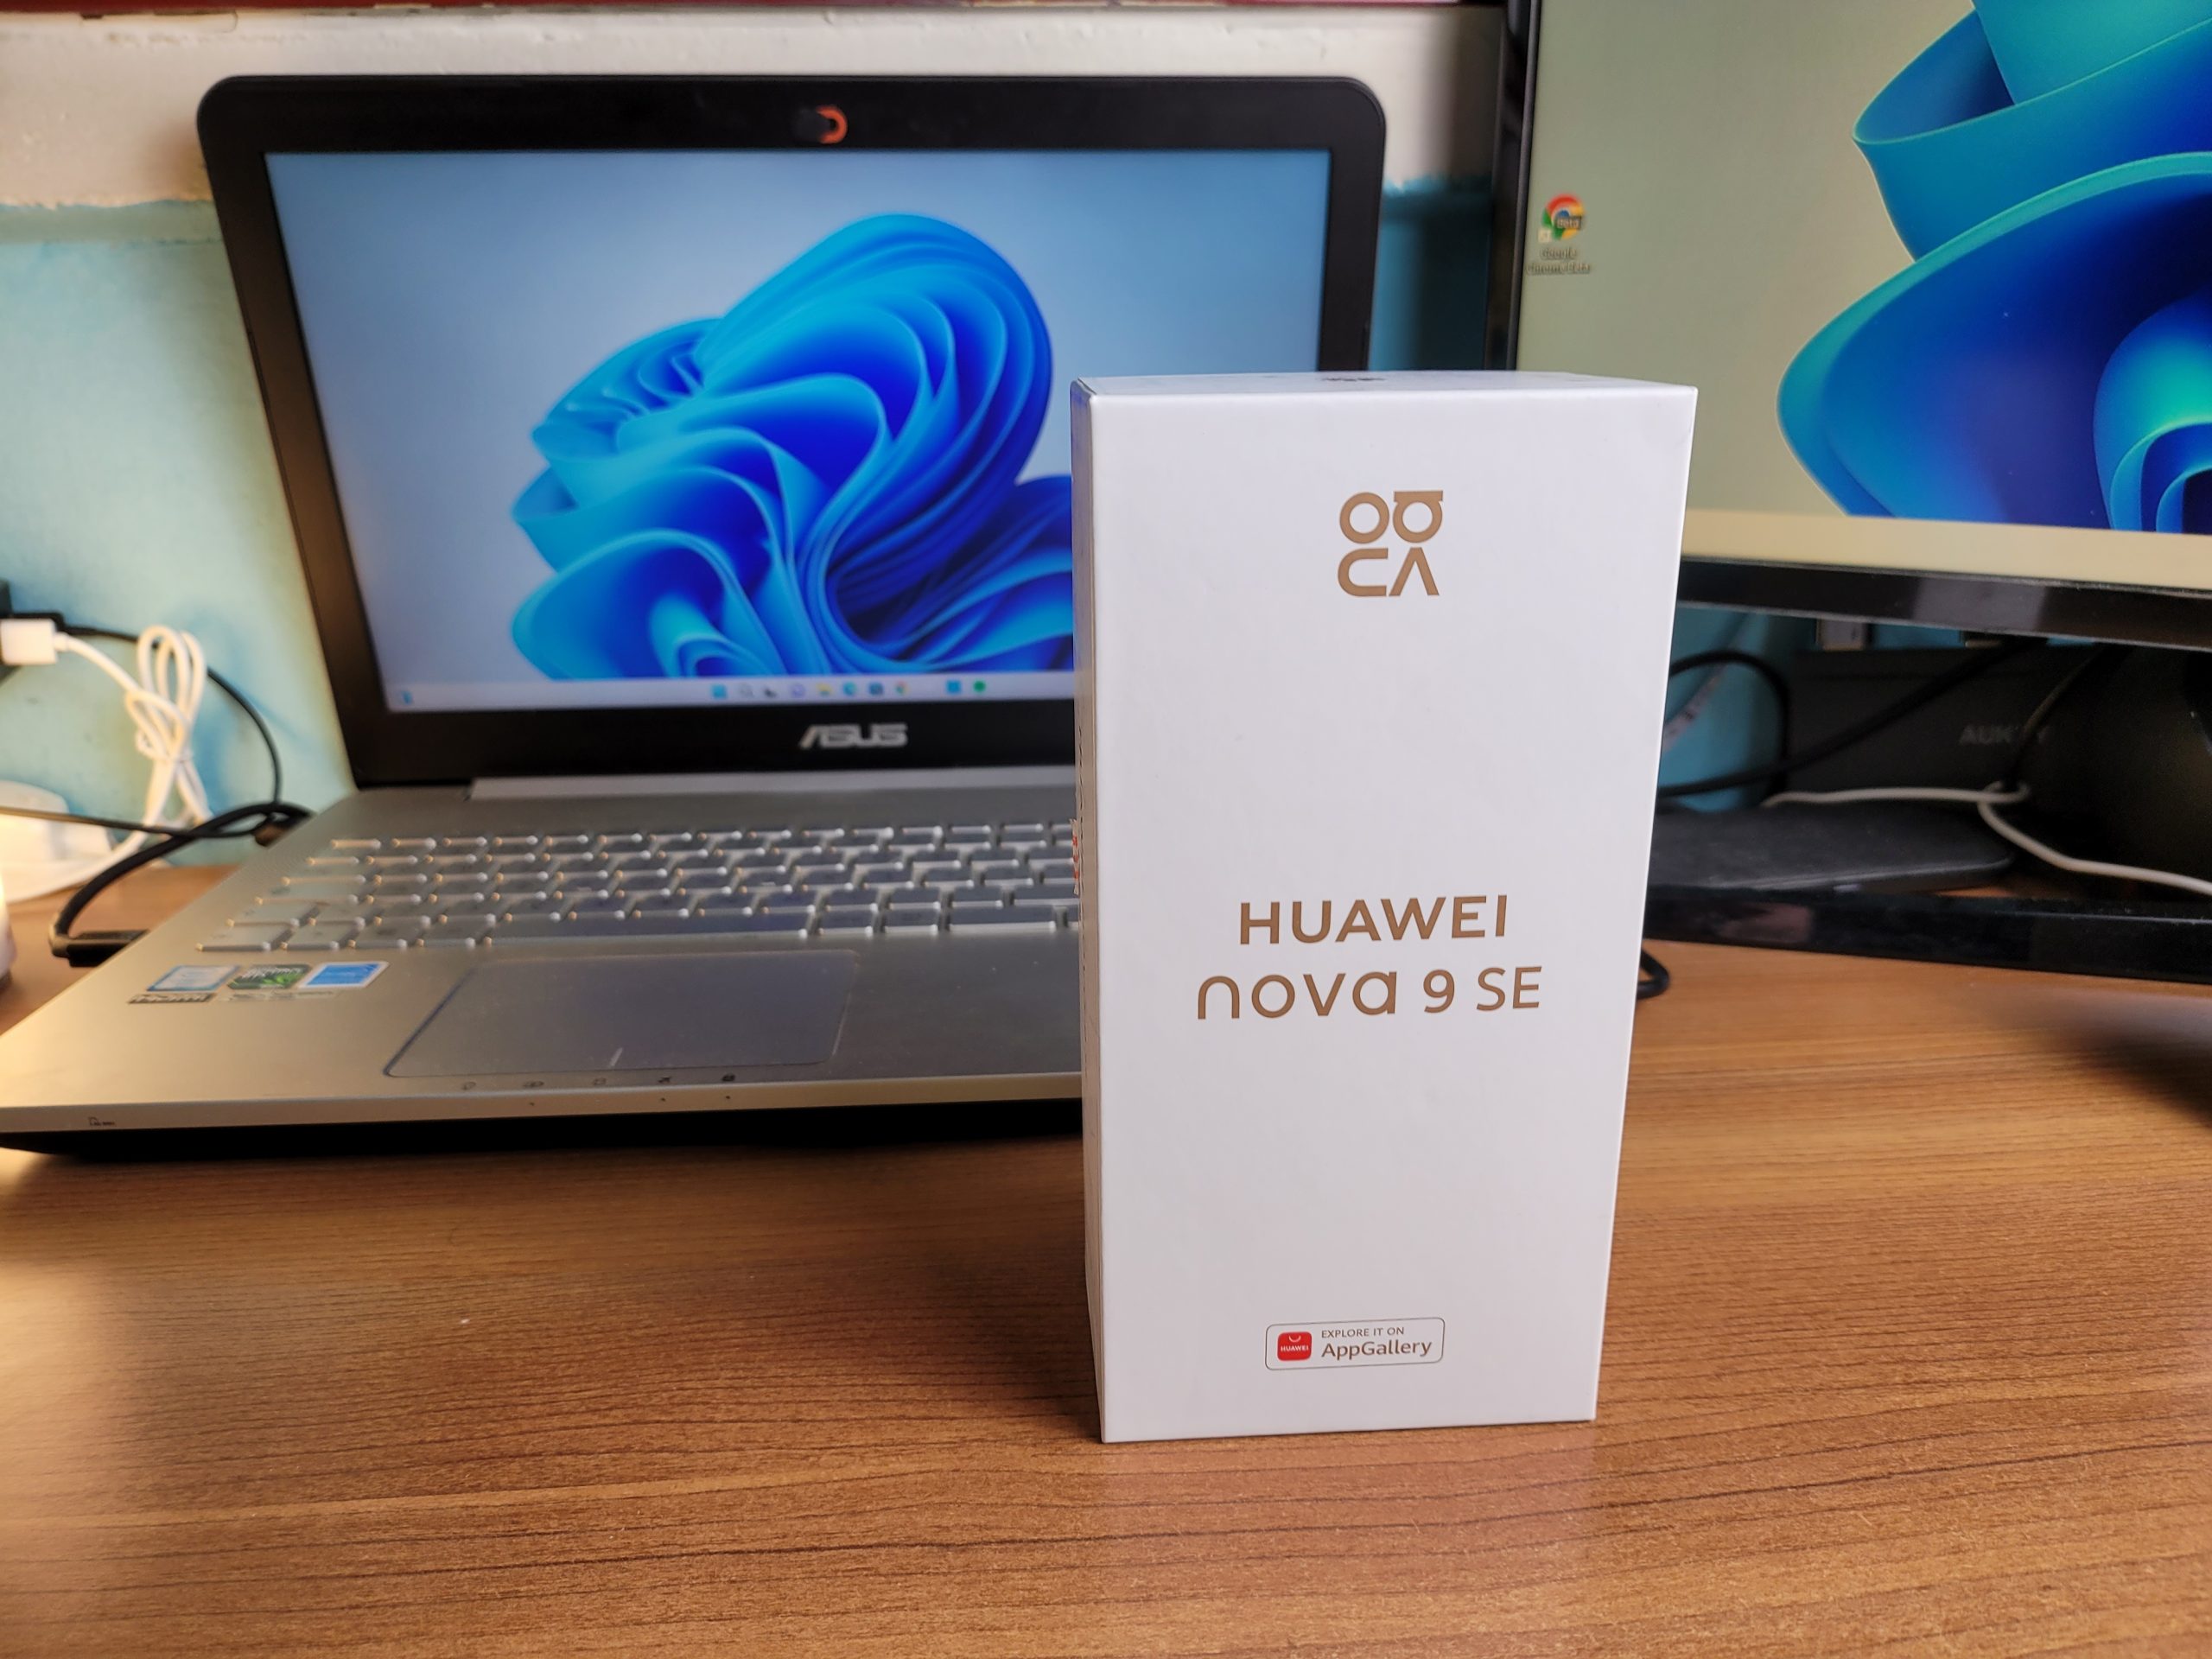 20220513 213735 scaled - Huawei Nova 9 SE recensione